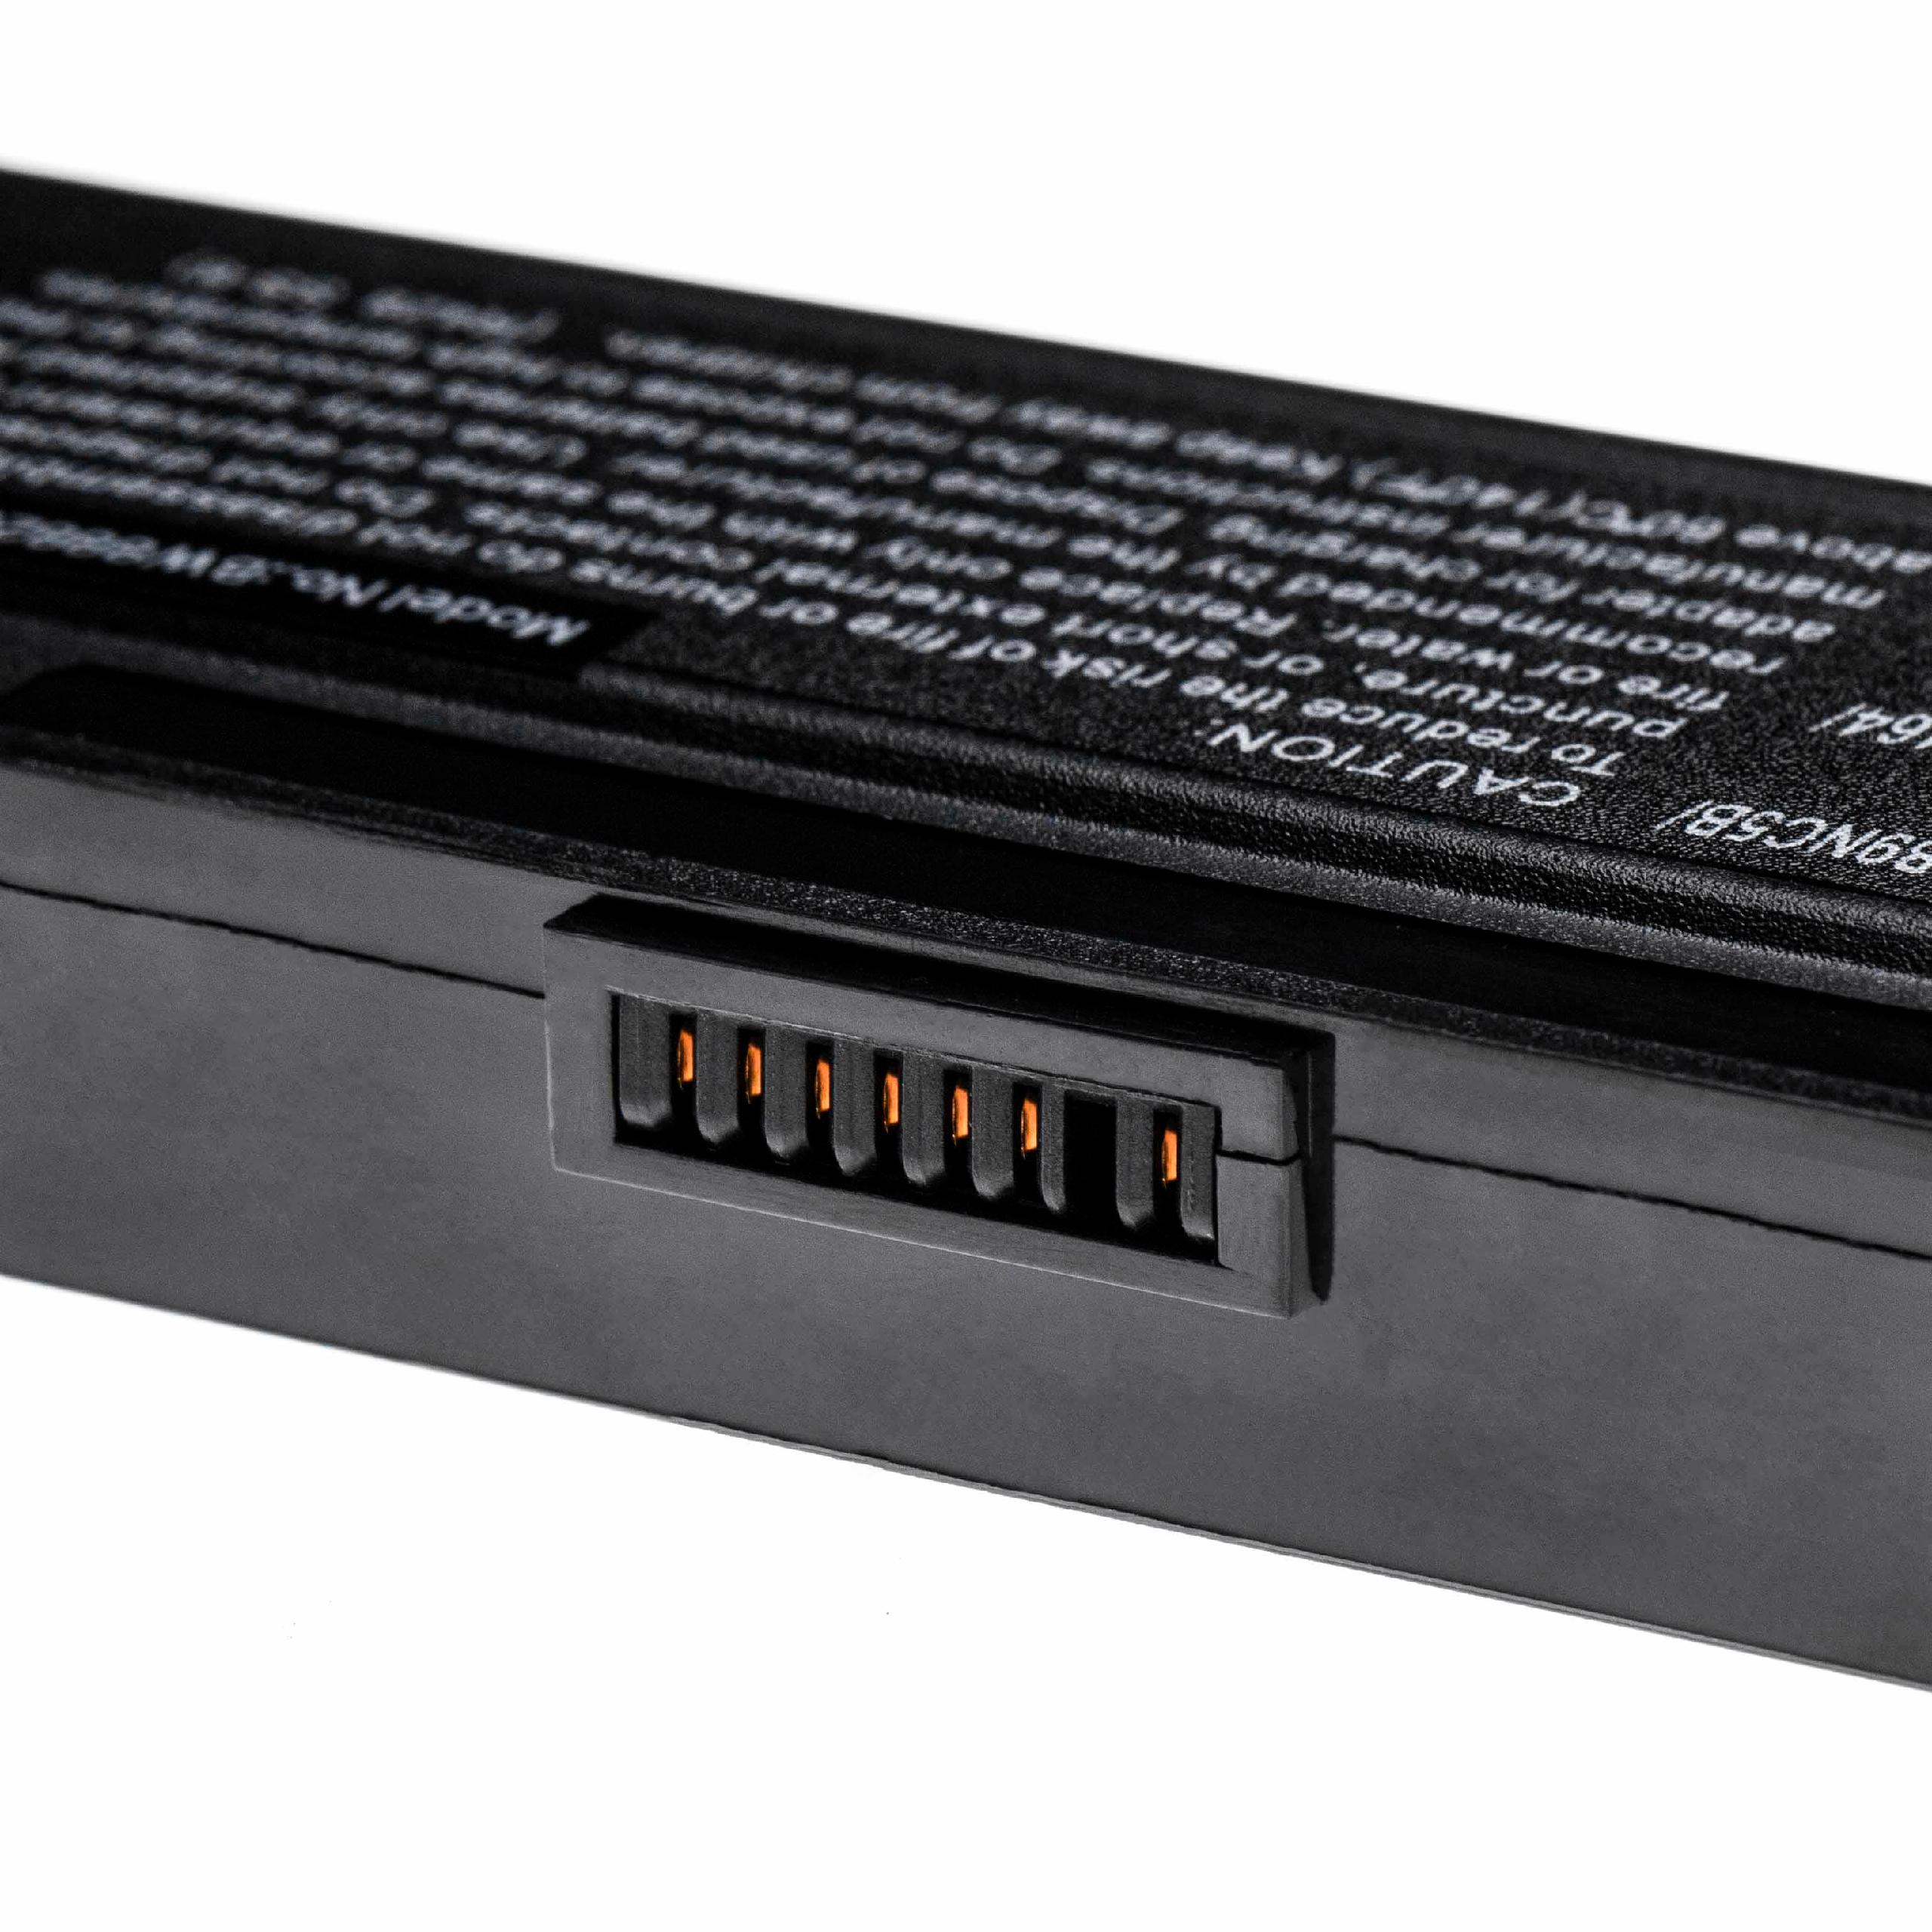 Akumulator do laptopa zamiennik Samsung AA-PB6NC6B, AA-PB6NC6W, AA-PB9MC6B - 5200 mAh 11,1 V Li-Ion, czarny